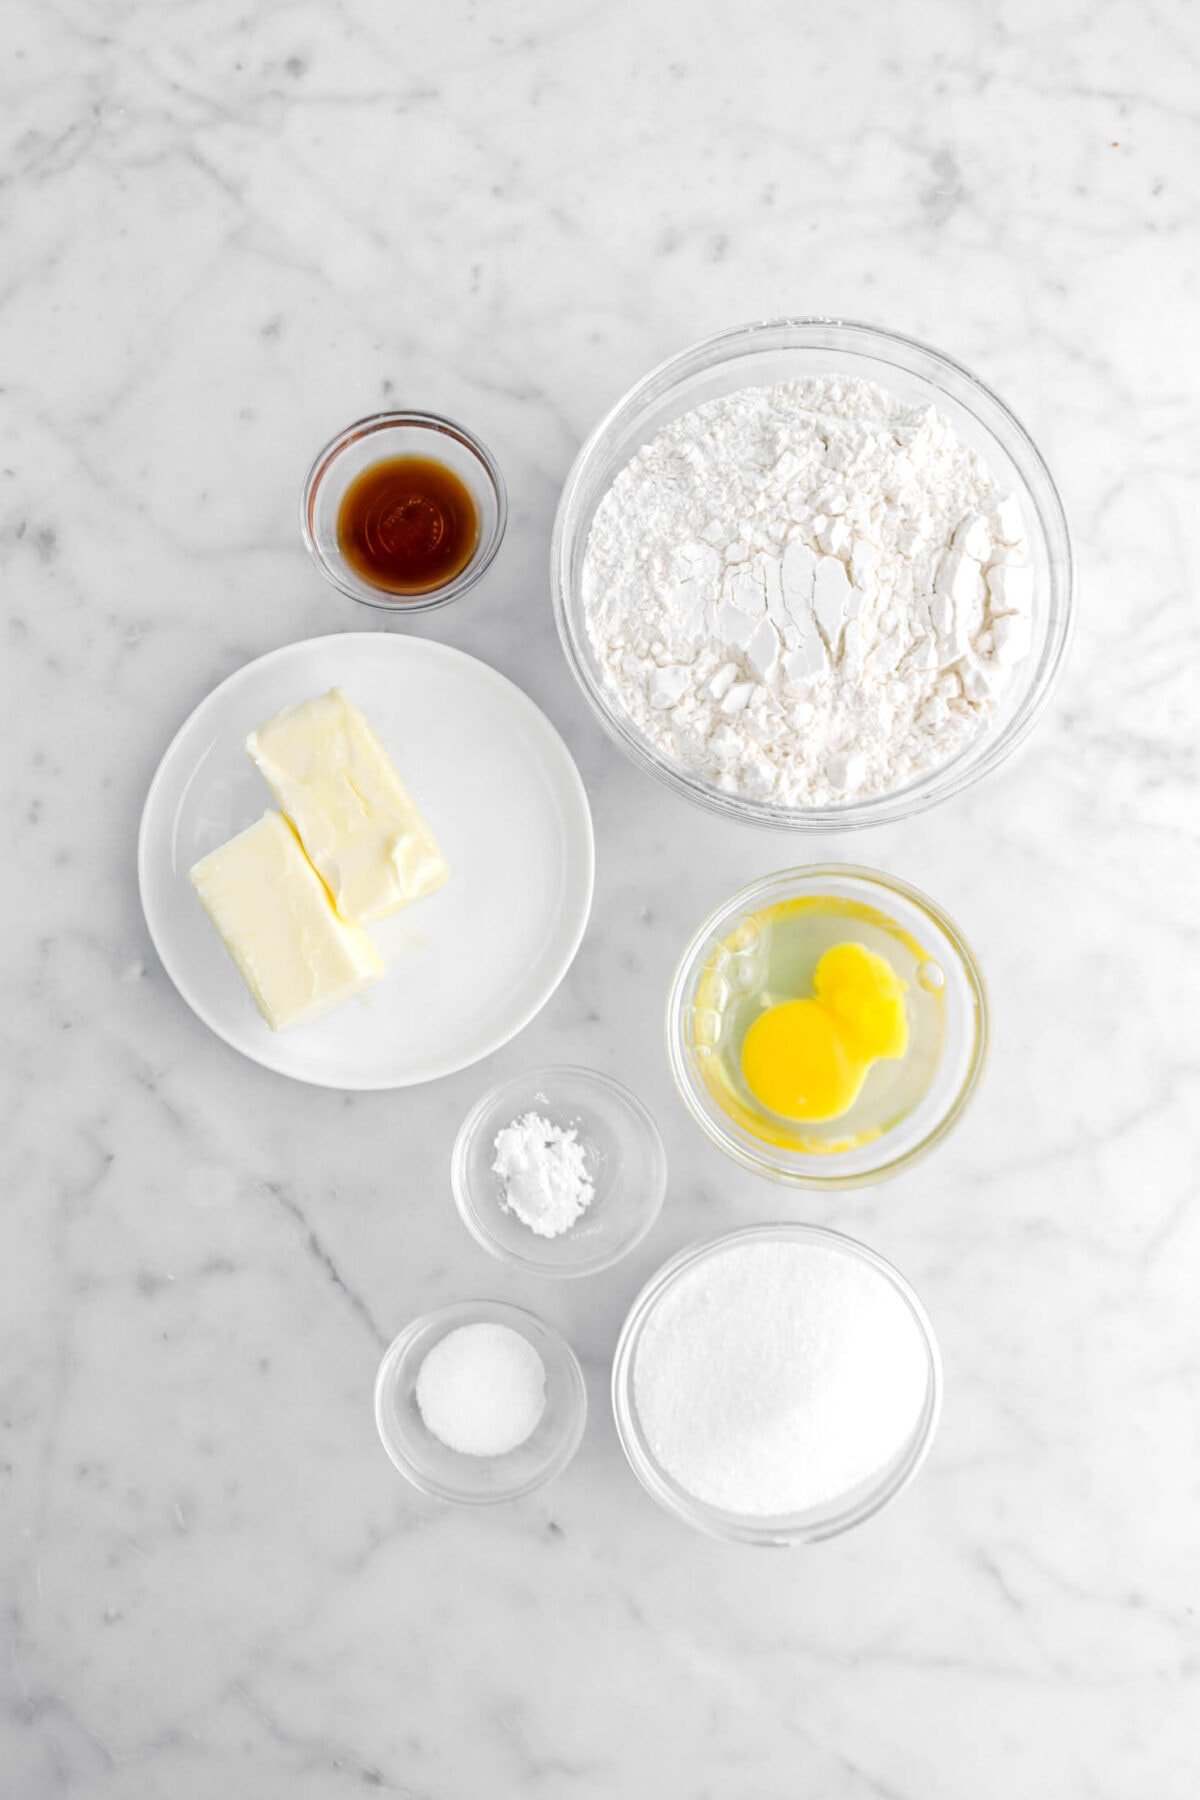 vanilla, butter, flour, egg, baking powder, salt, and sugar on marble surface.